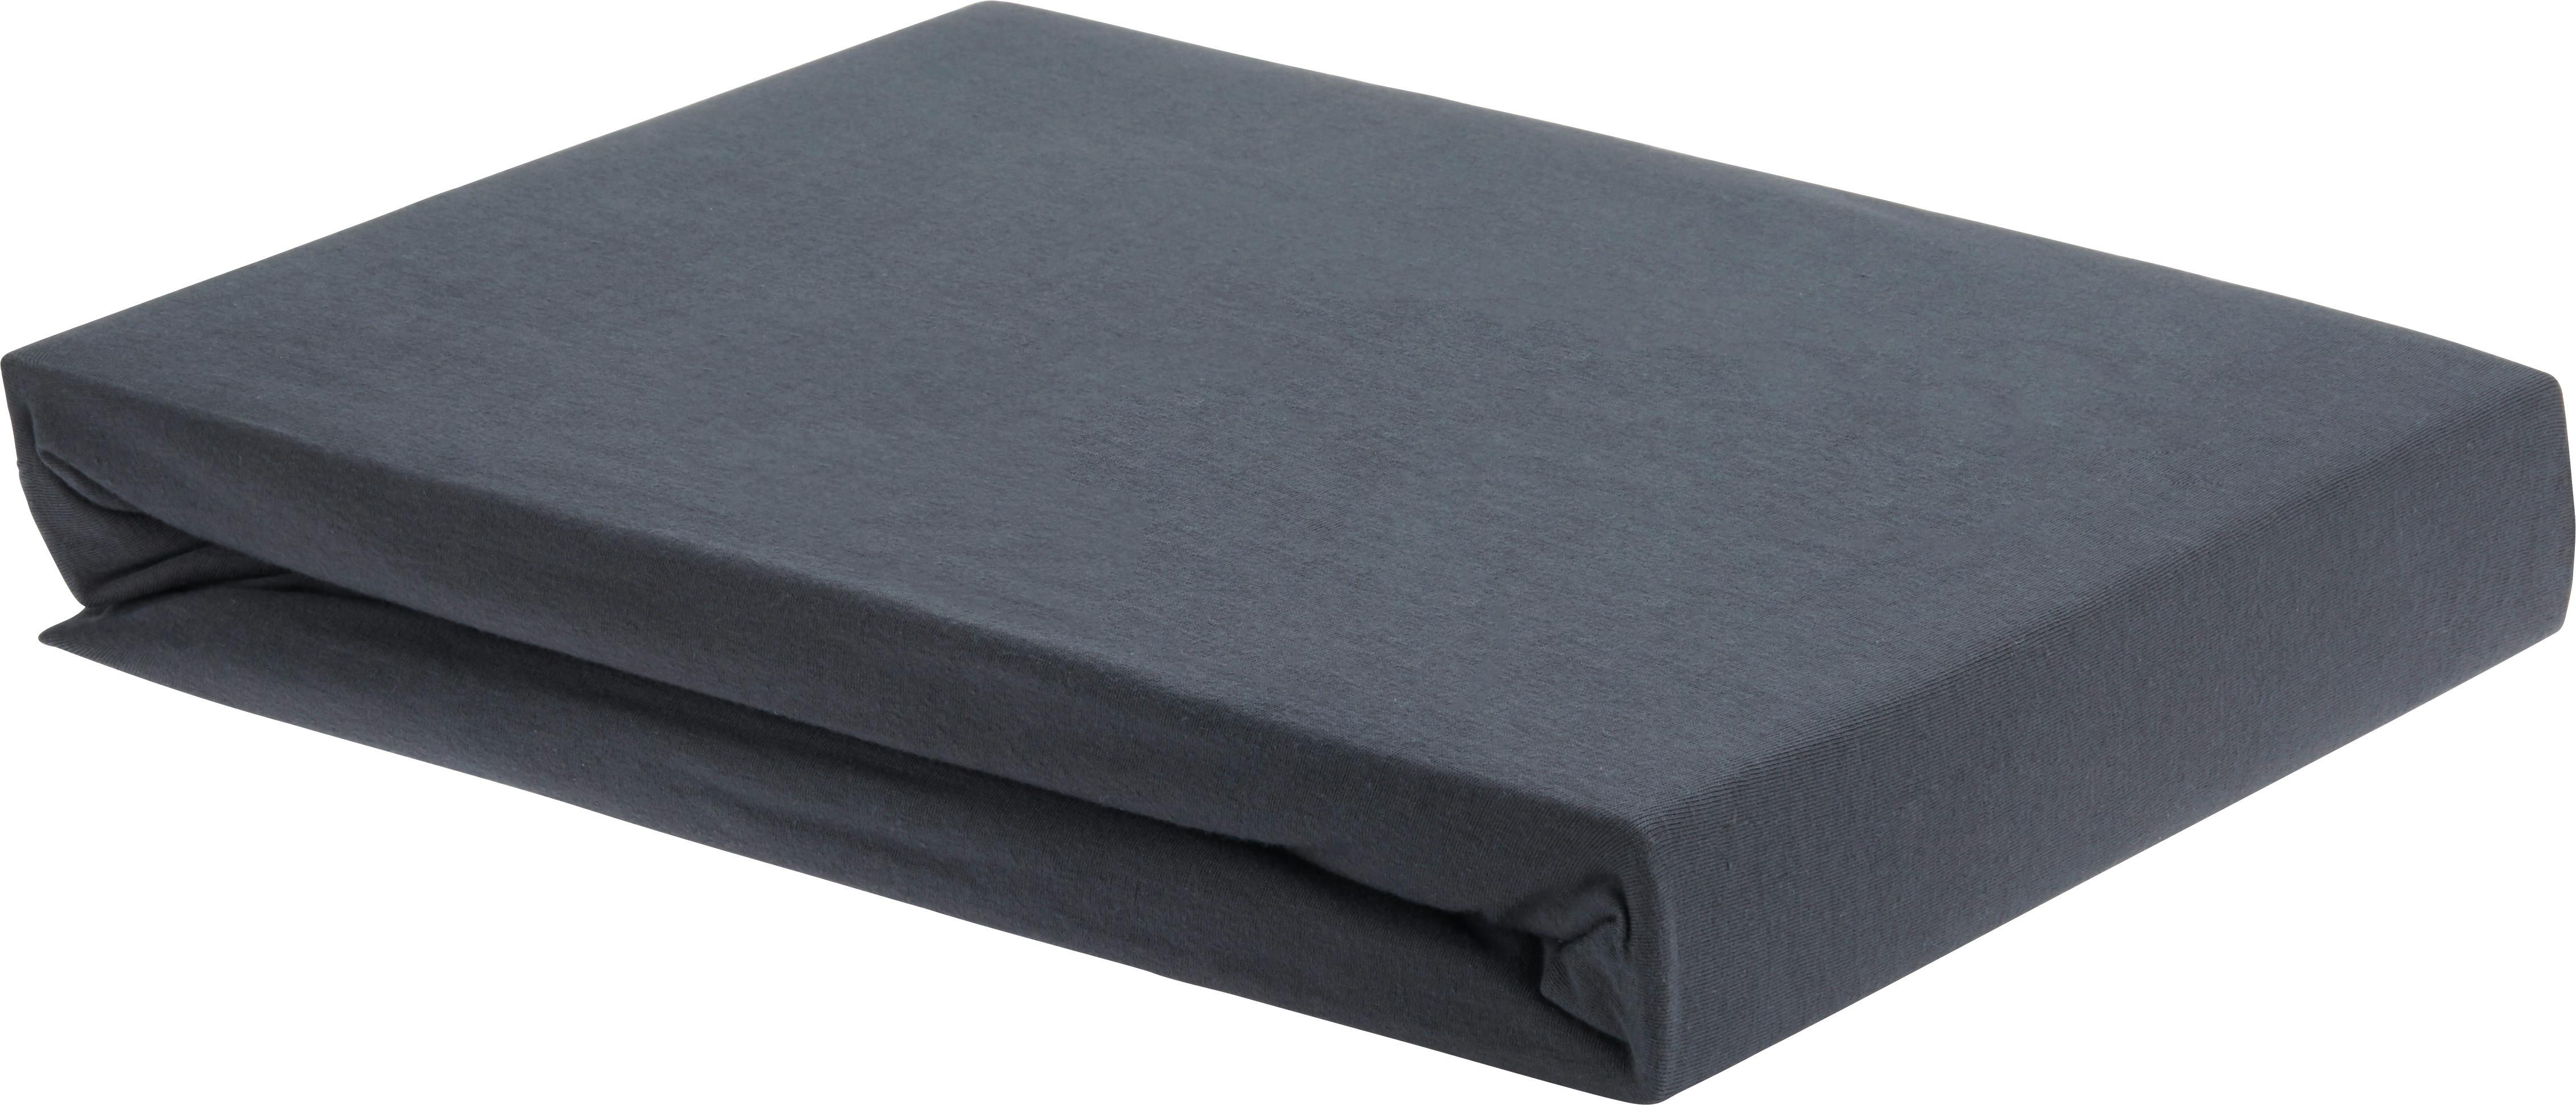 Napenjalna Rjuha Elasthan - antracit, tekstil (100/200/28cm) - Premium Living